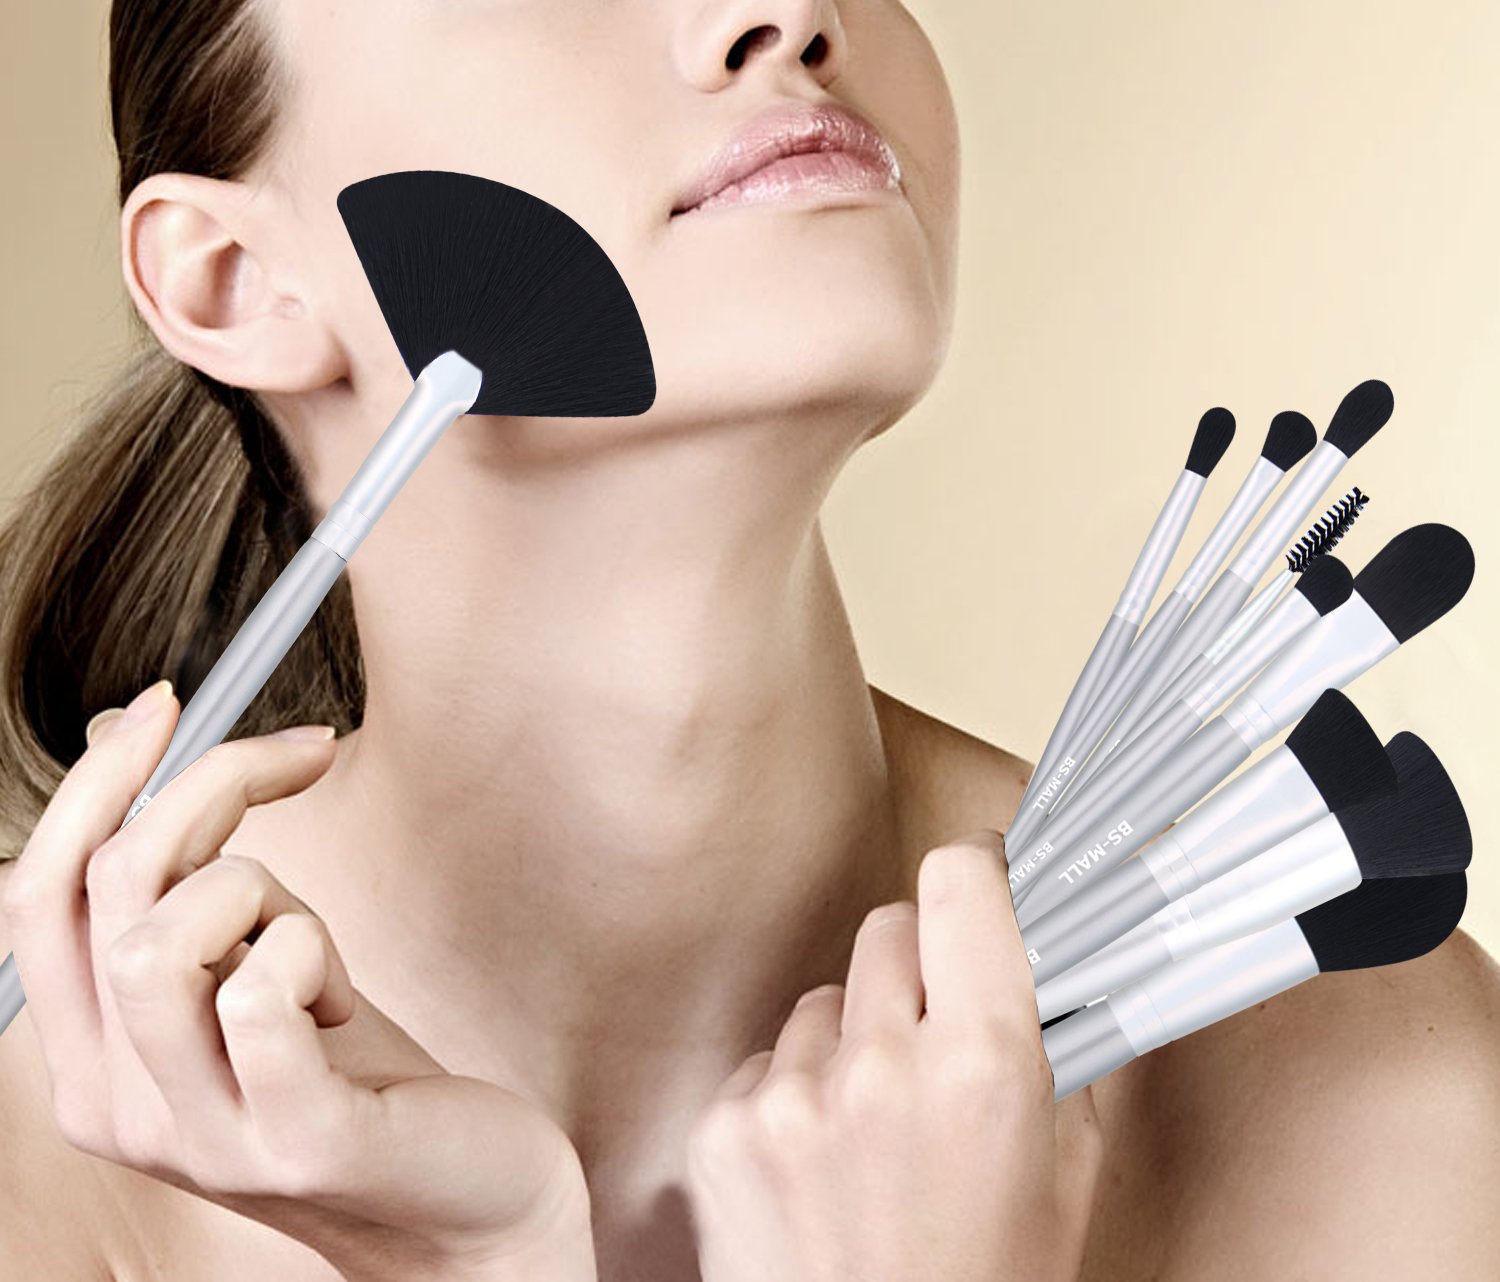 BS-MALL Makeup Brush Set Premium Synthetic Bristles Powder Foundation Blush Contour Concealers Lip Eyeshadow Brushes Kit (14 PCS)